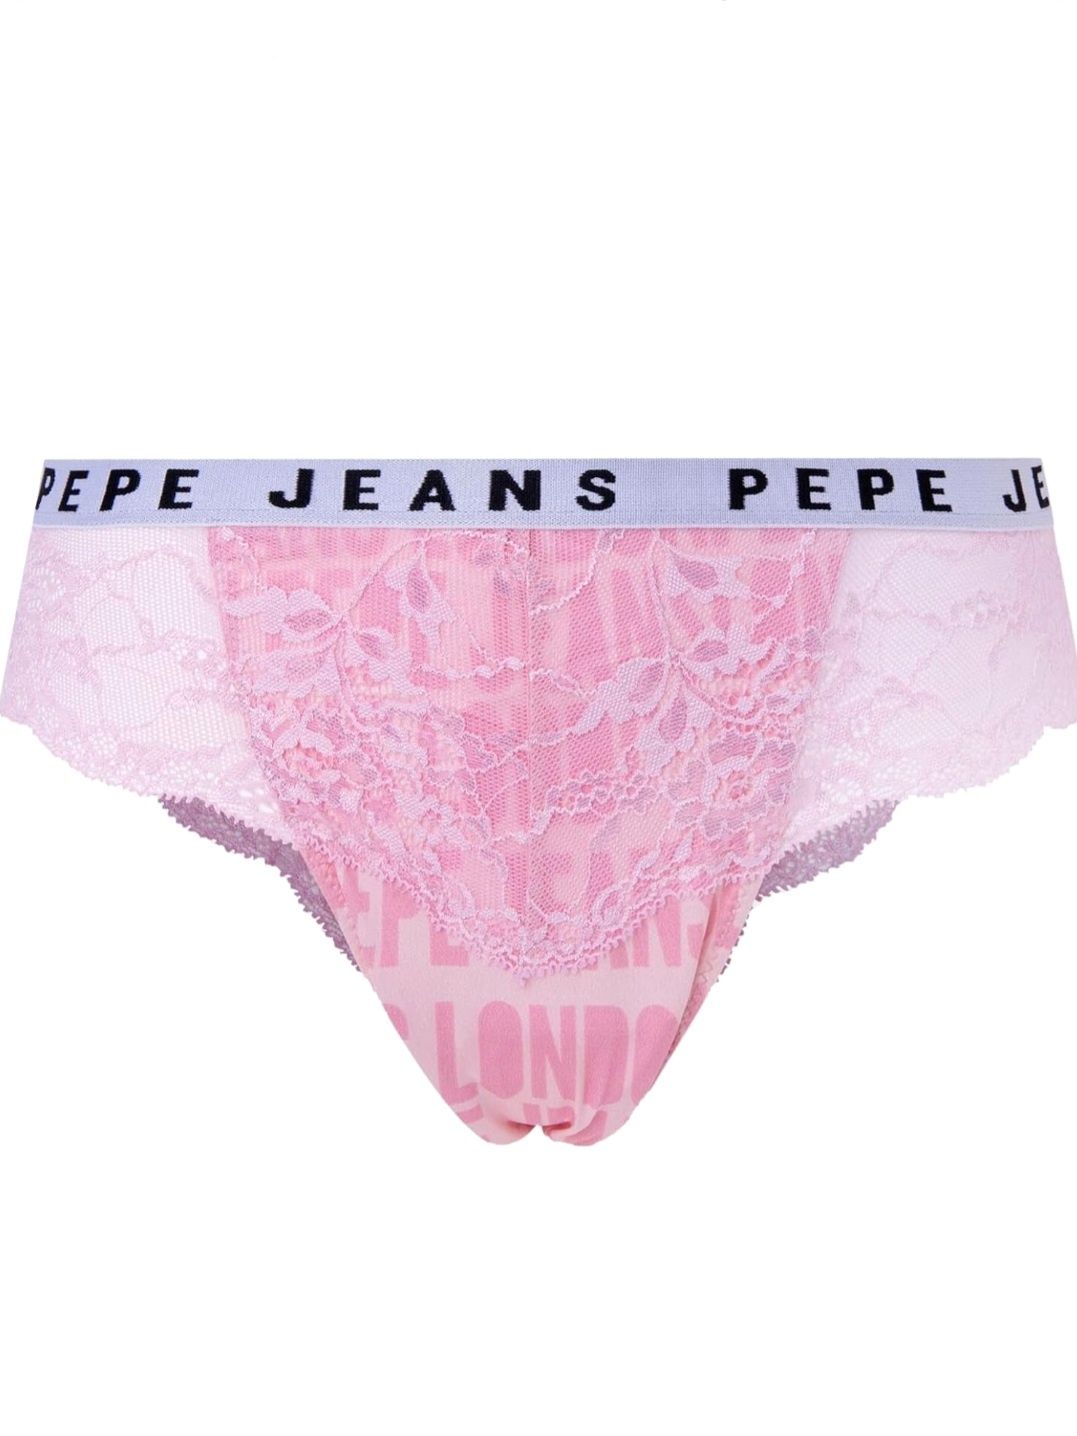 Pepe Jeans кружевной комплект белья М